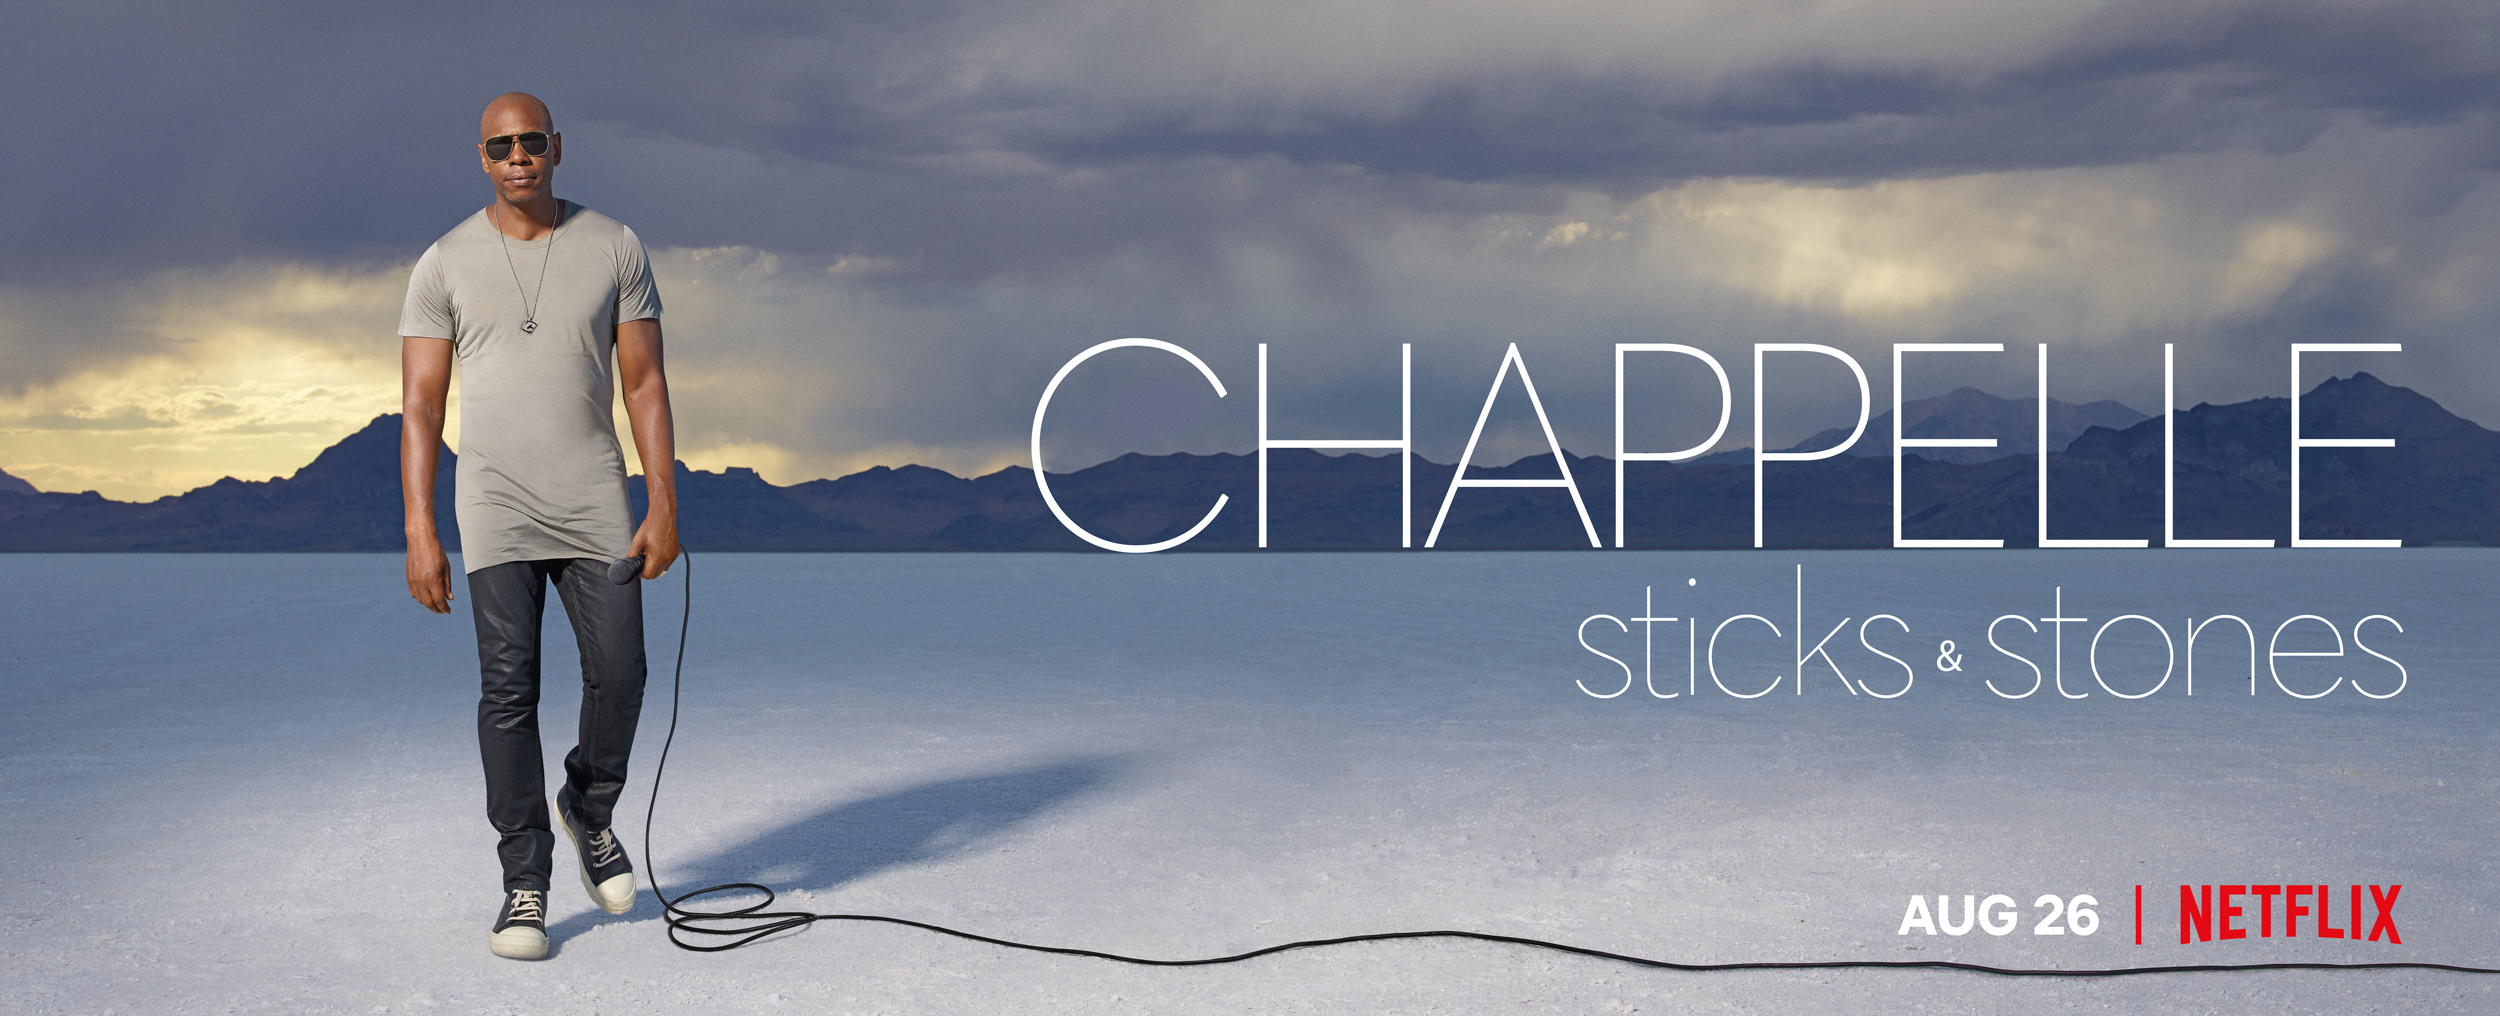 Dave Chappelle Sticks & Stones Key Art